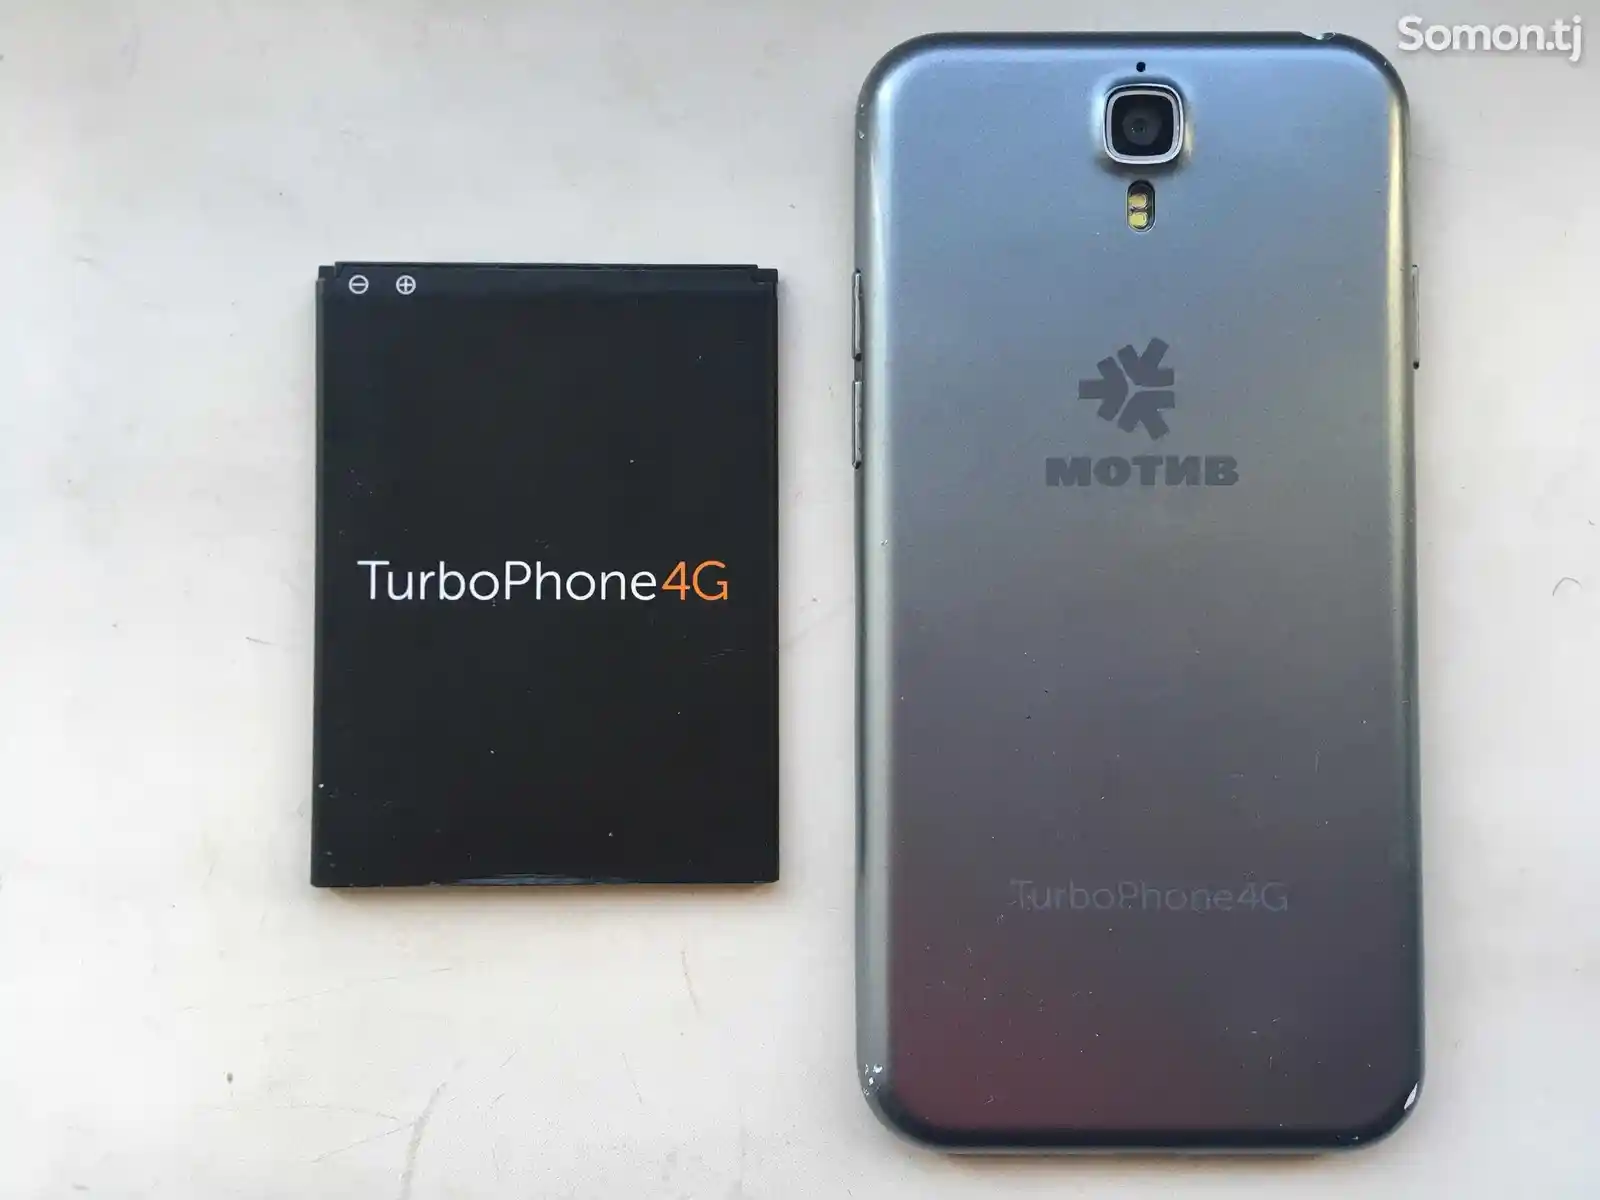 Мотив TurboPhone 4G, 8 ГБ-2